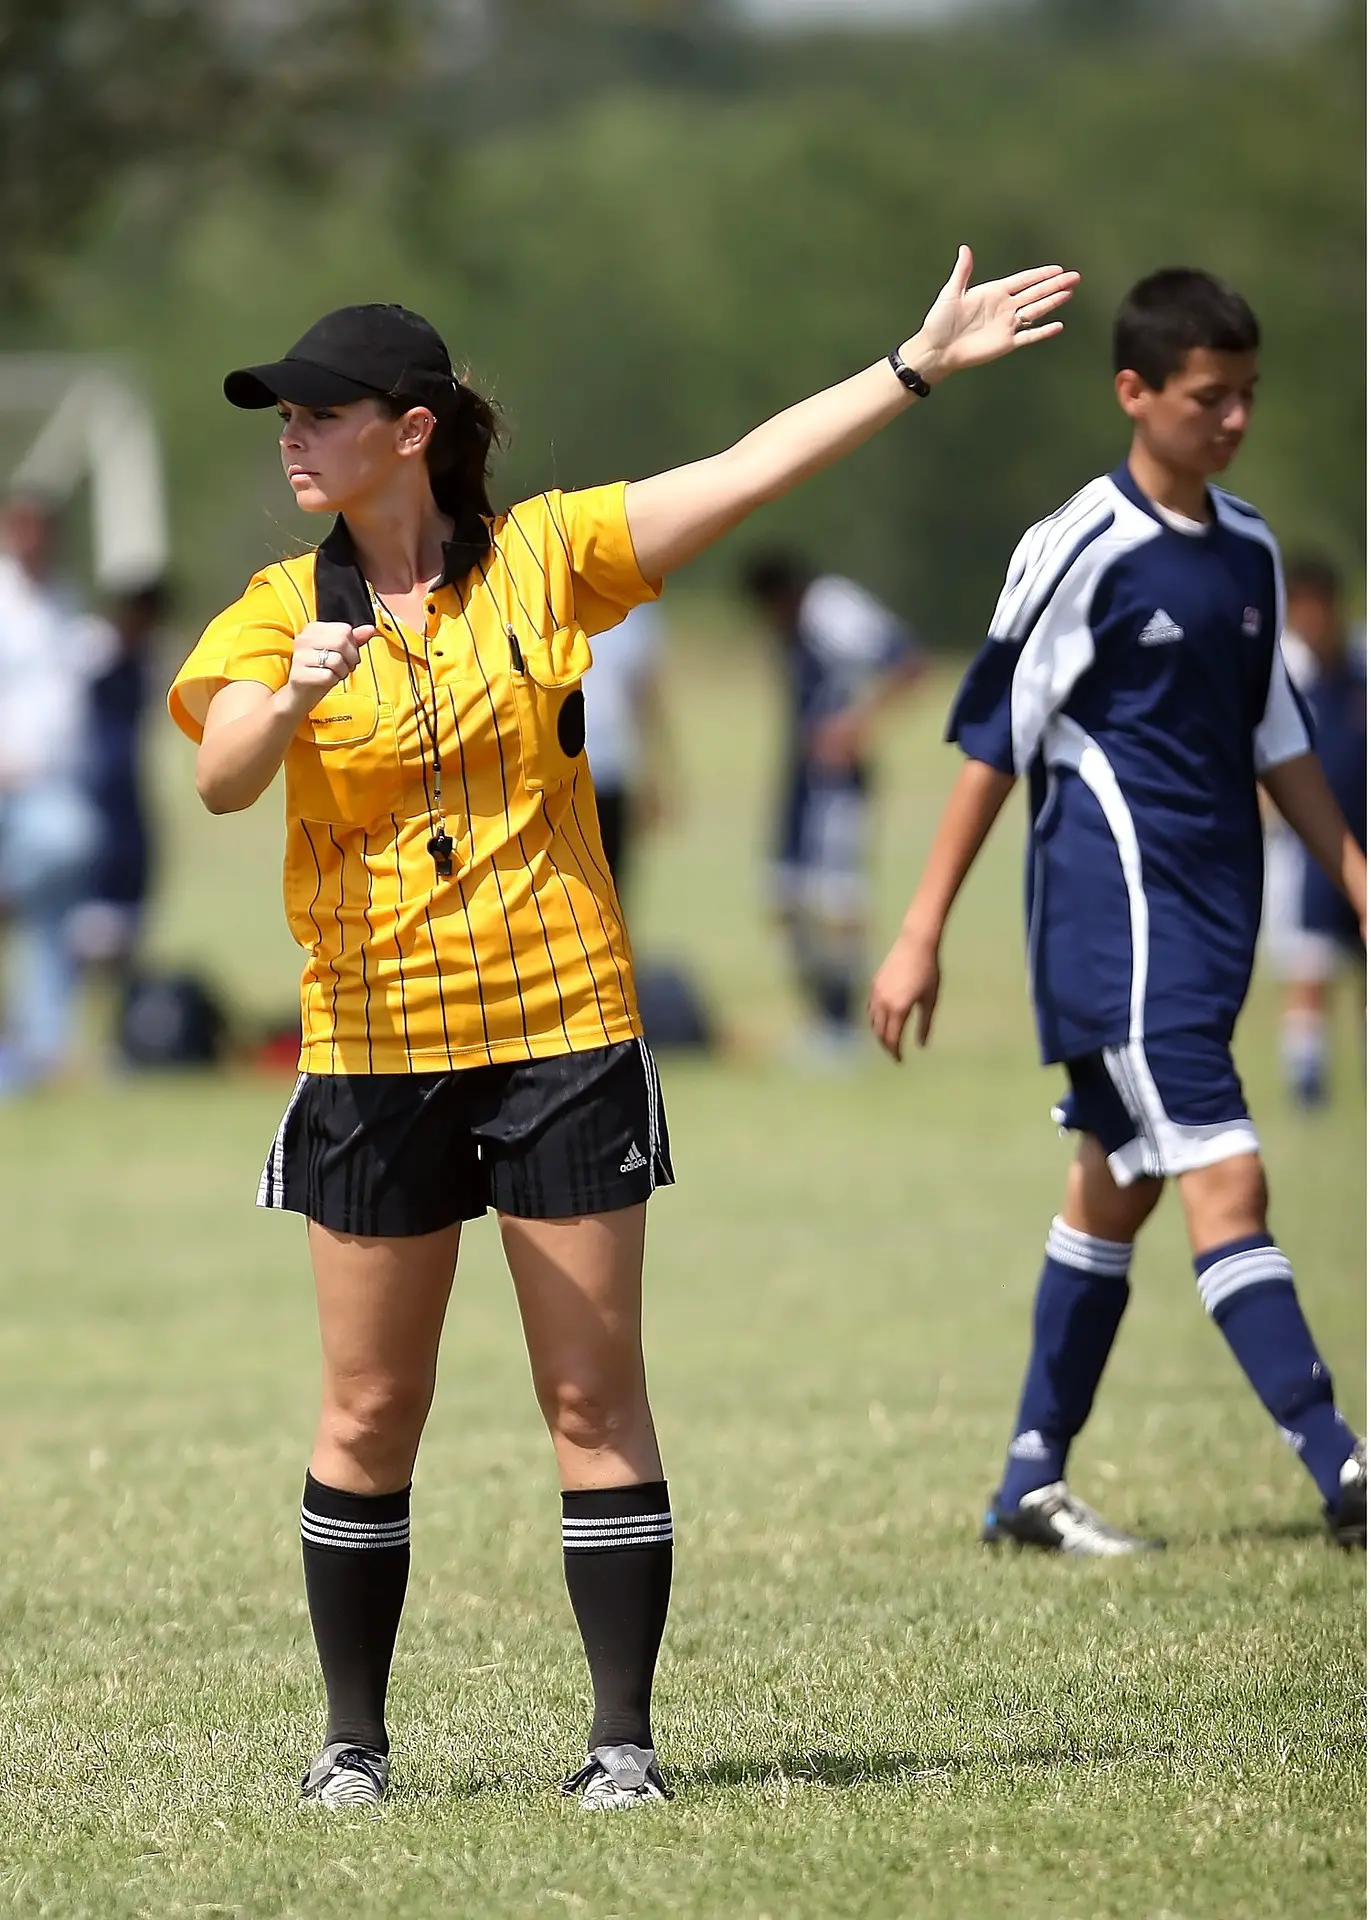 Referee signalling a goal